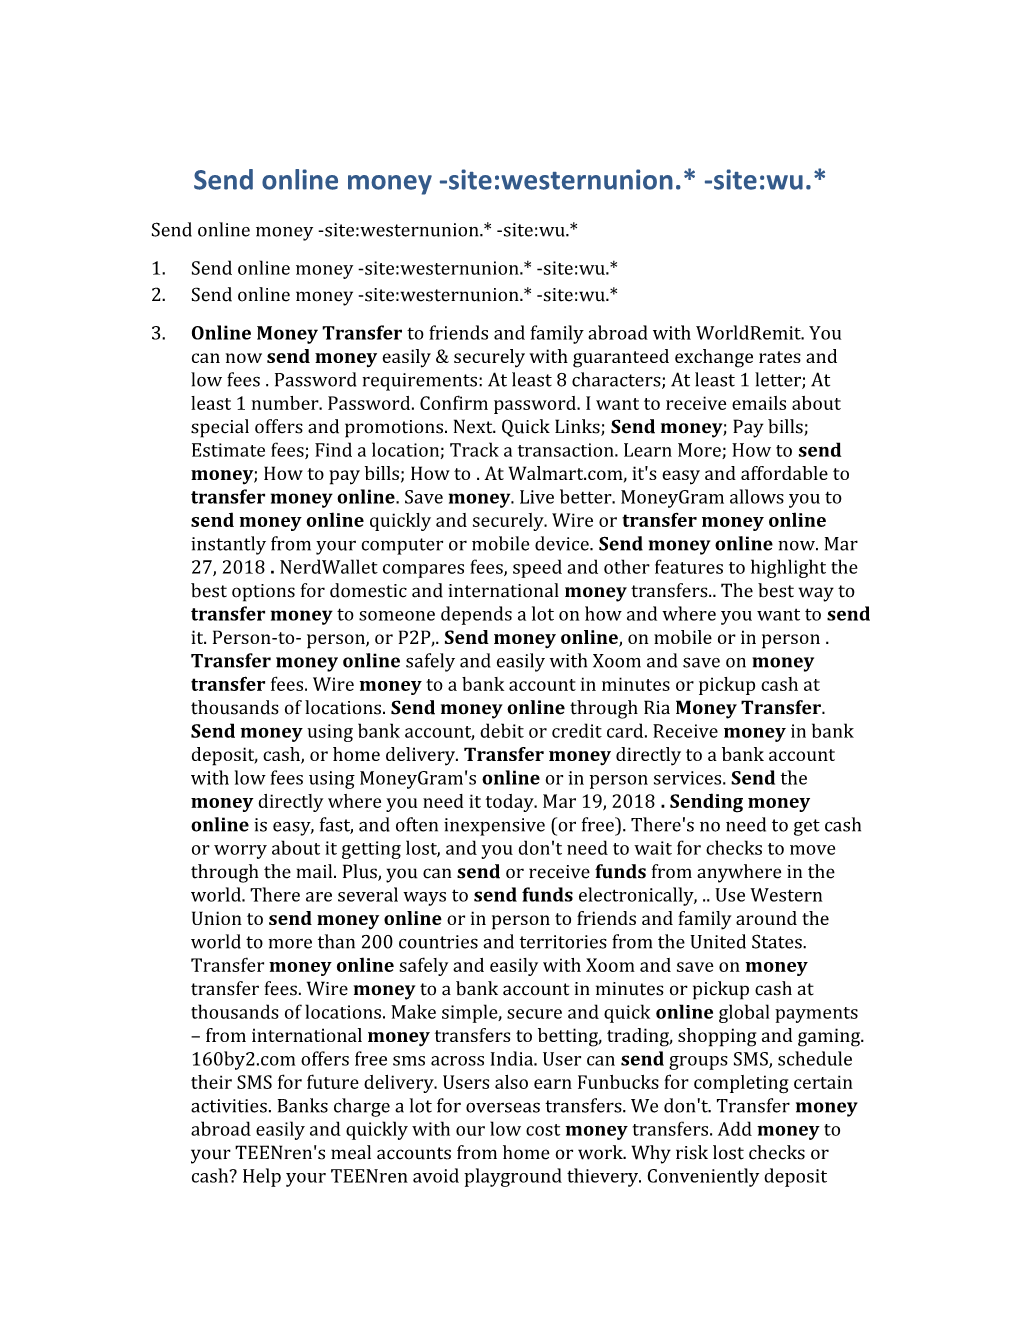 Send Online Money -Site:Westernunion.* -Site:Wu.*